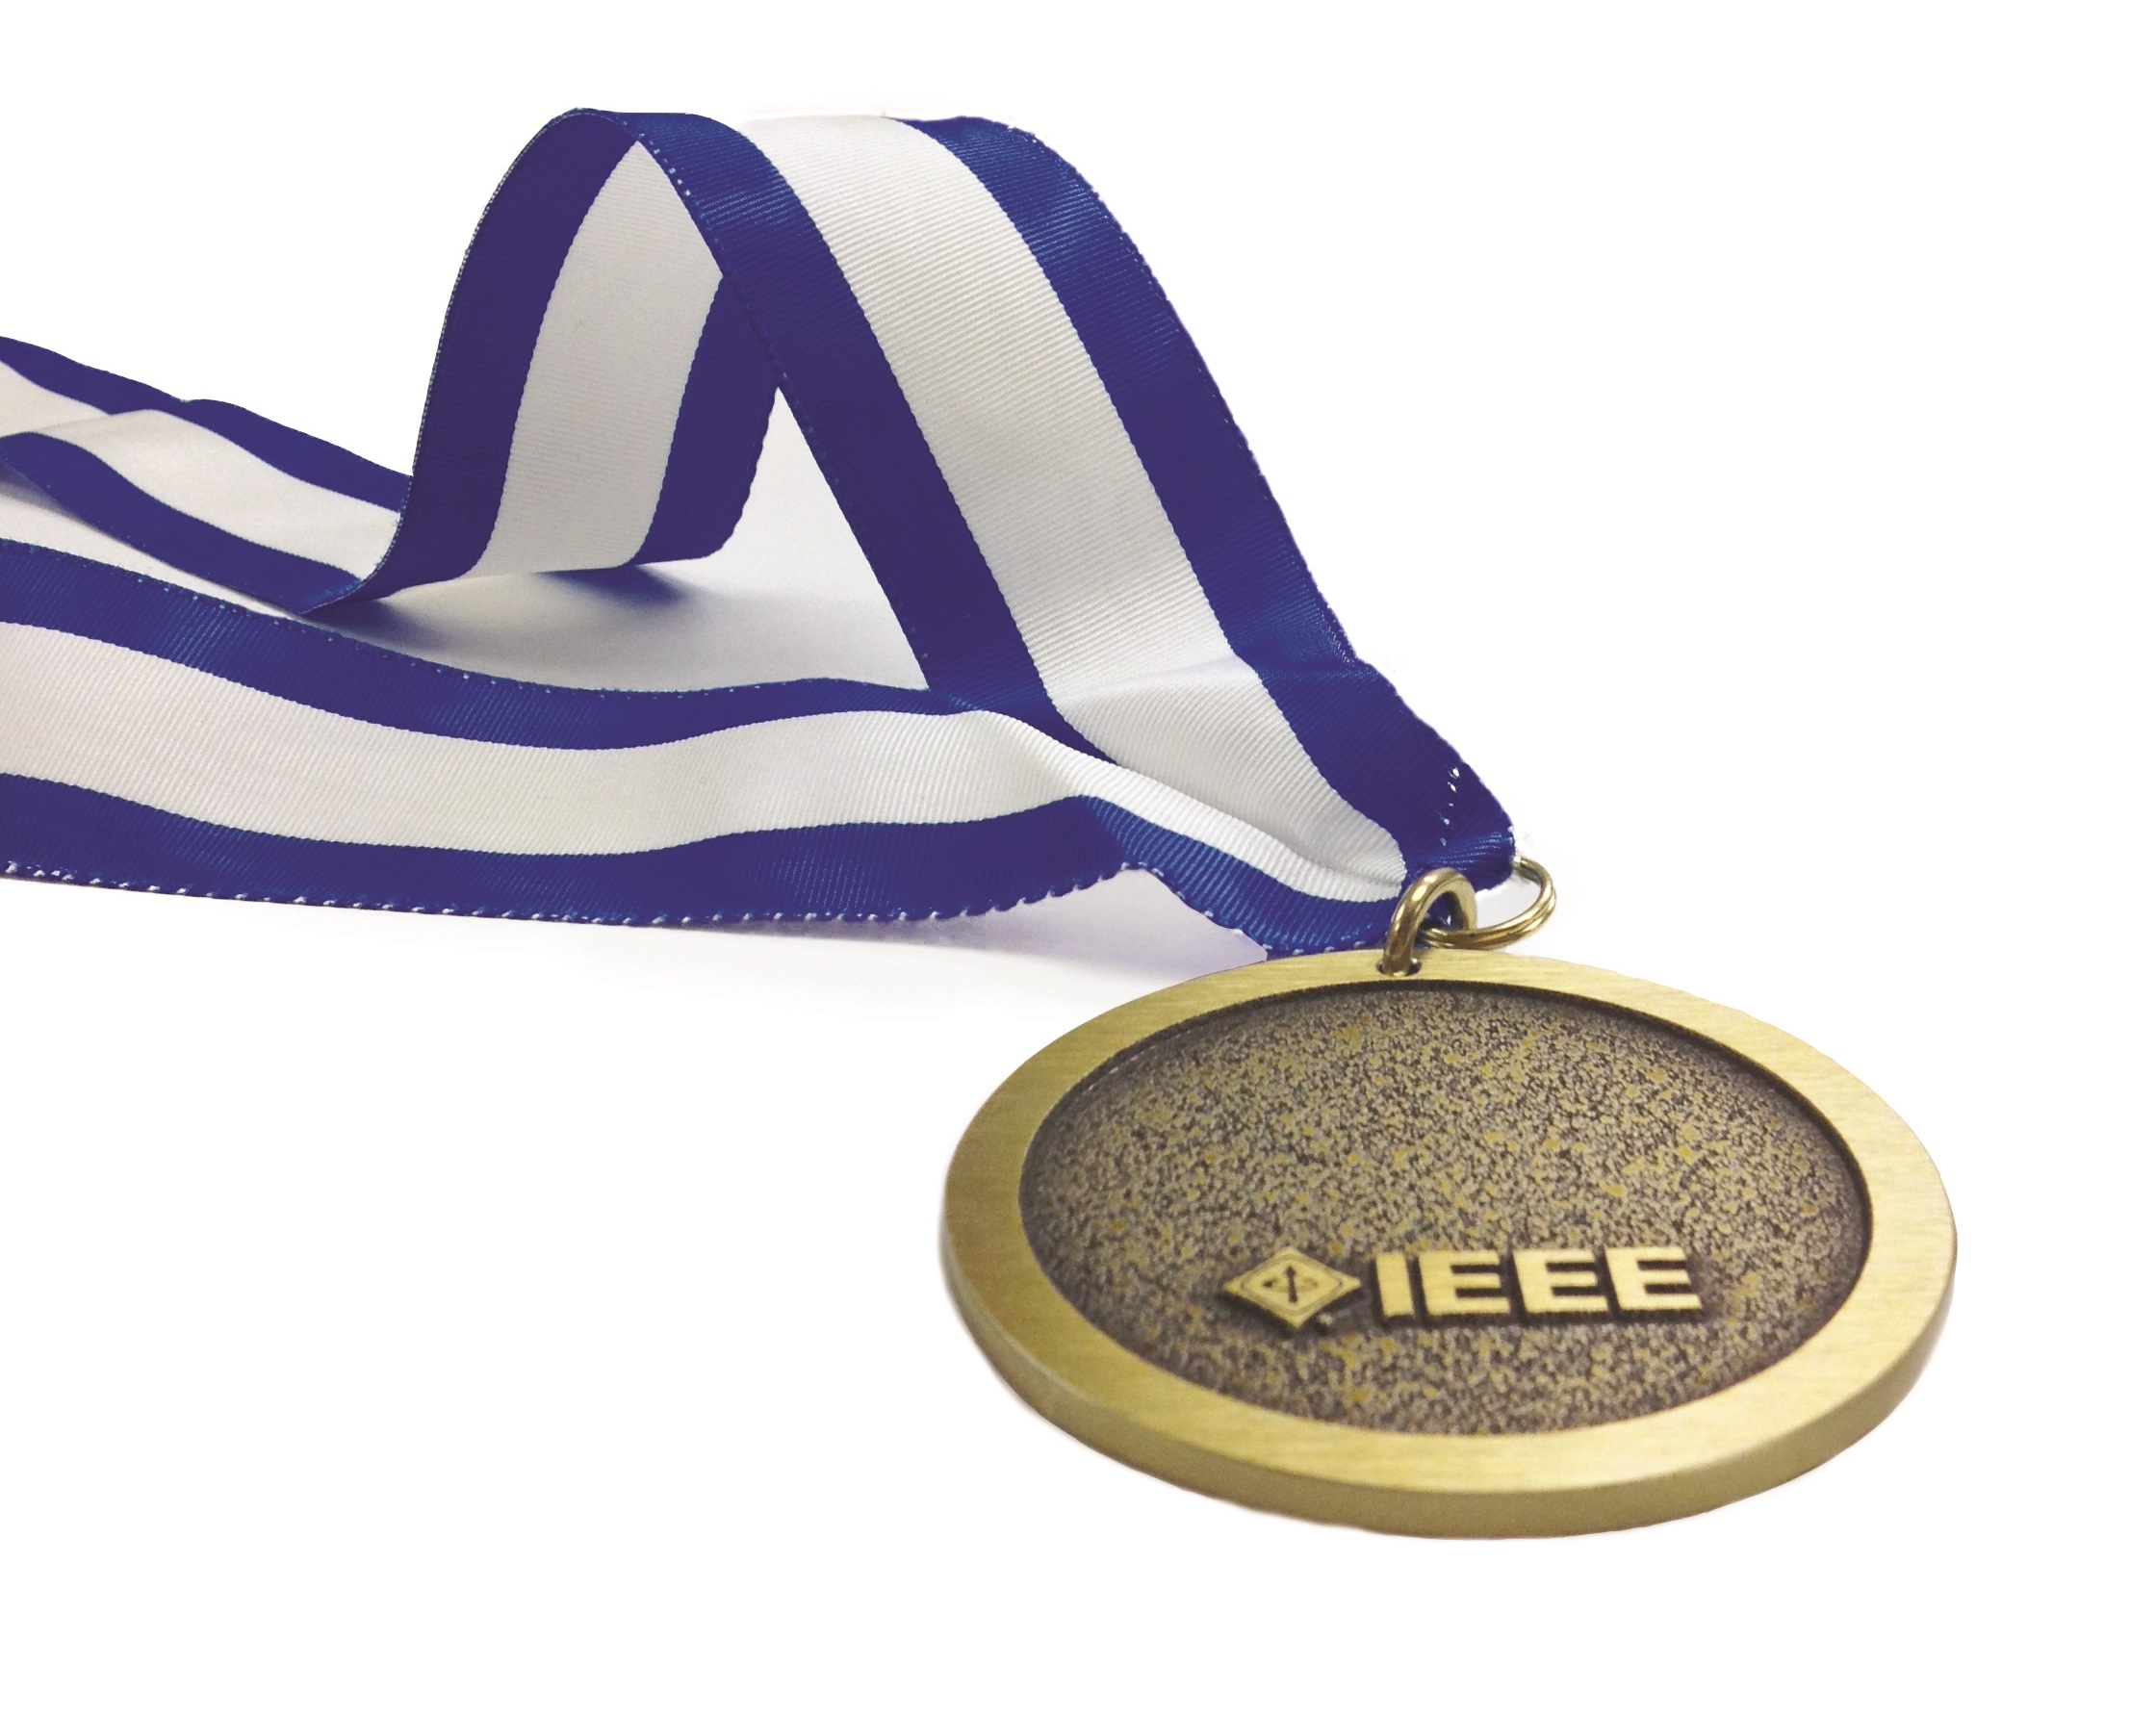 IEEE_Awards_generic_medal_on ribbon